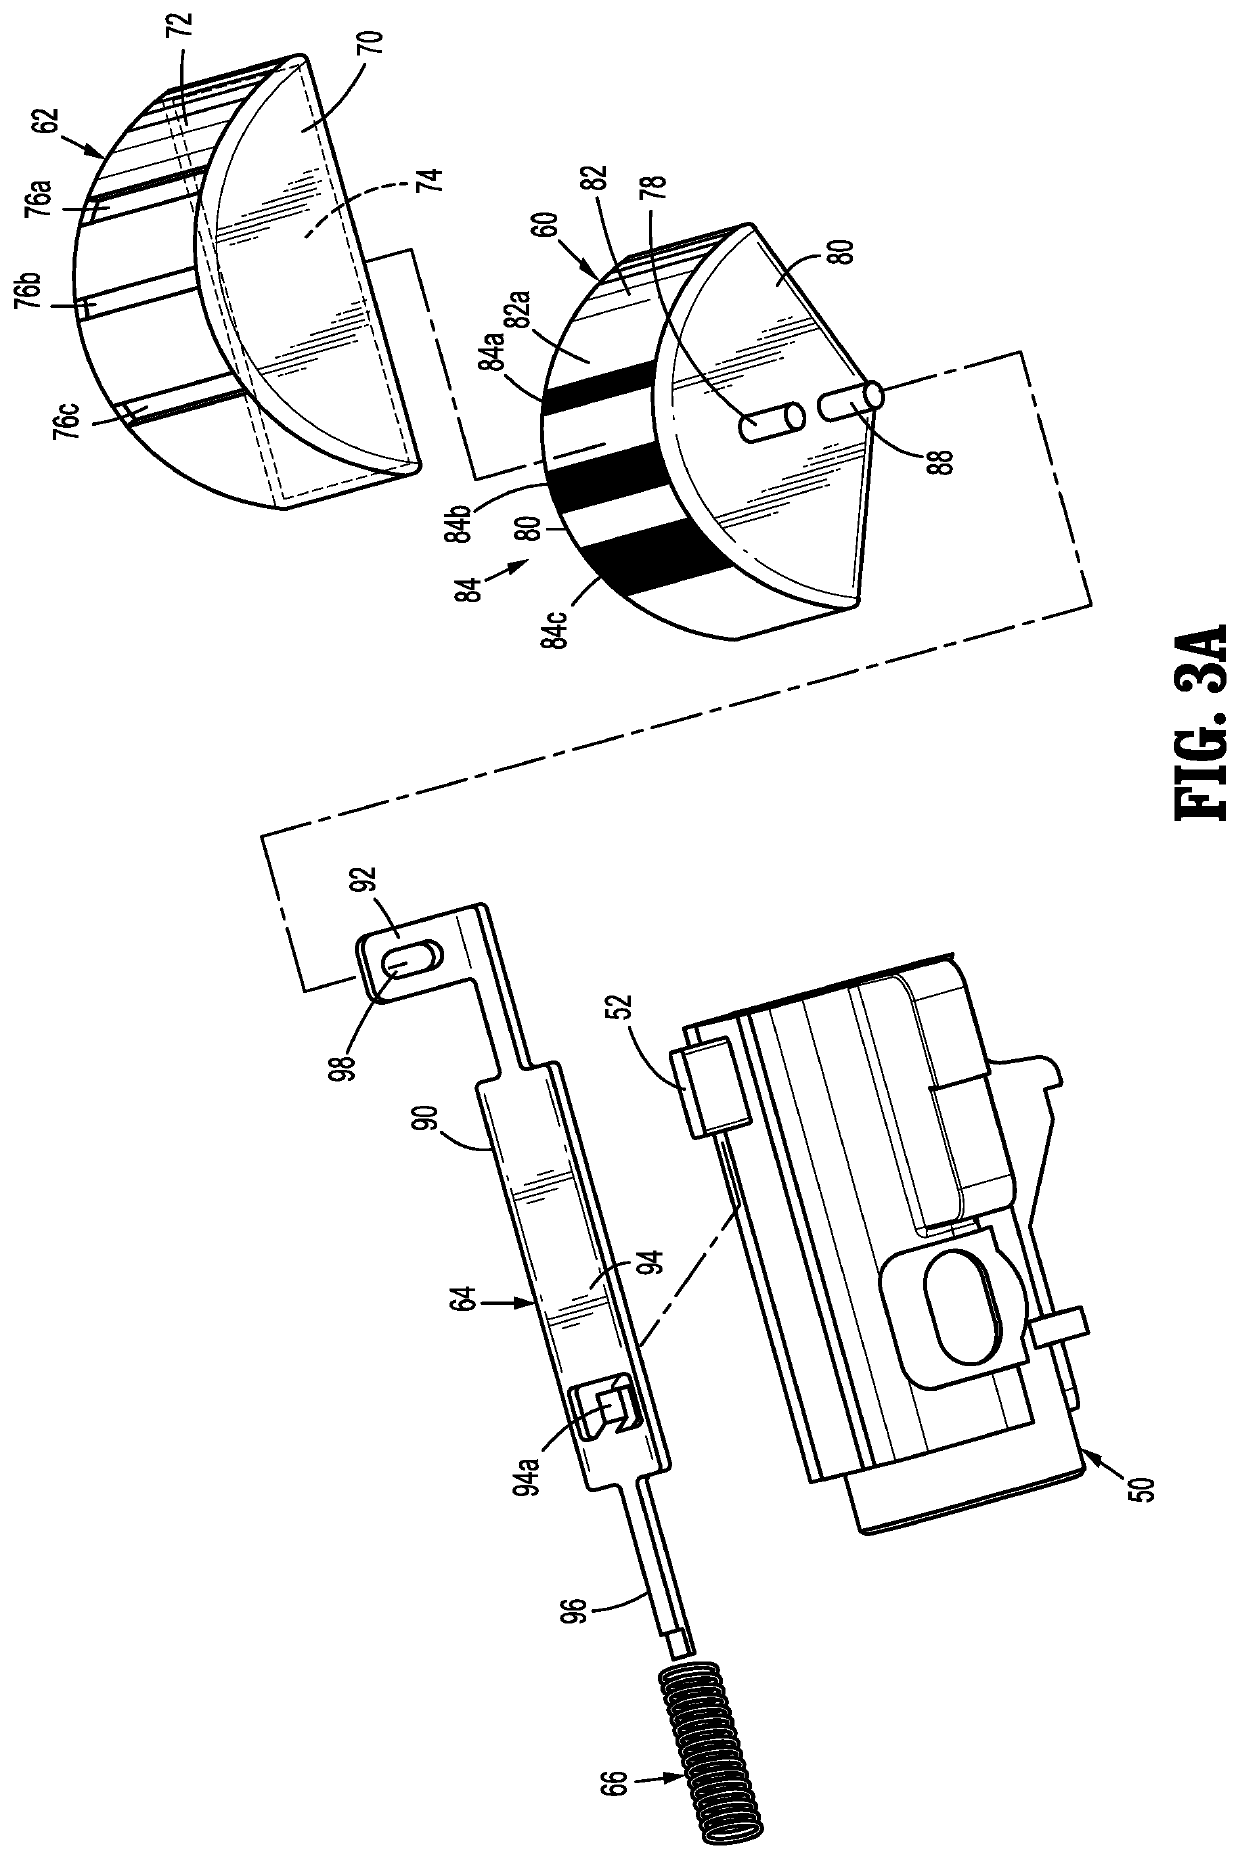 Circular stapler with visual indicator mechanism